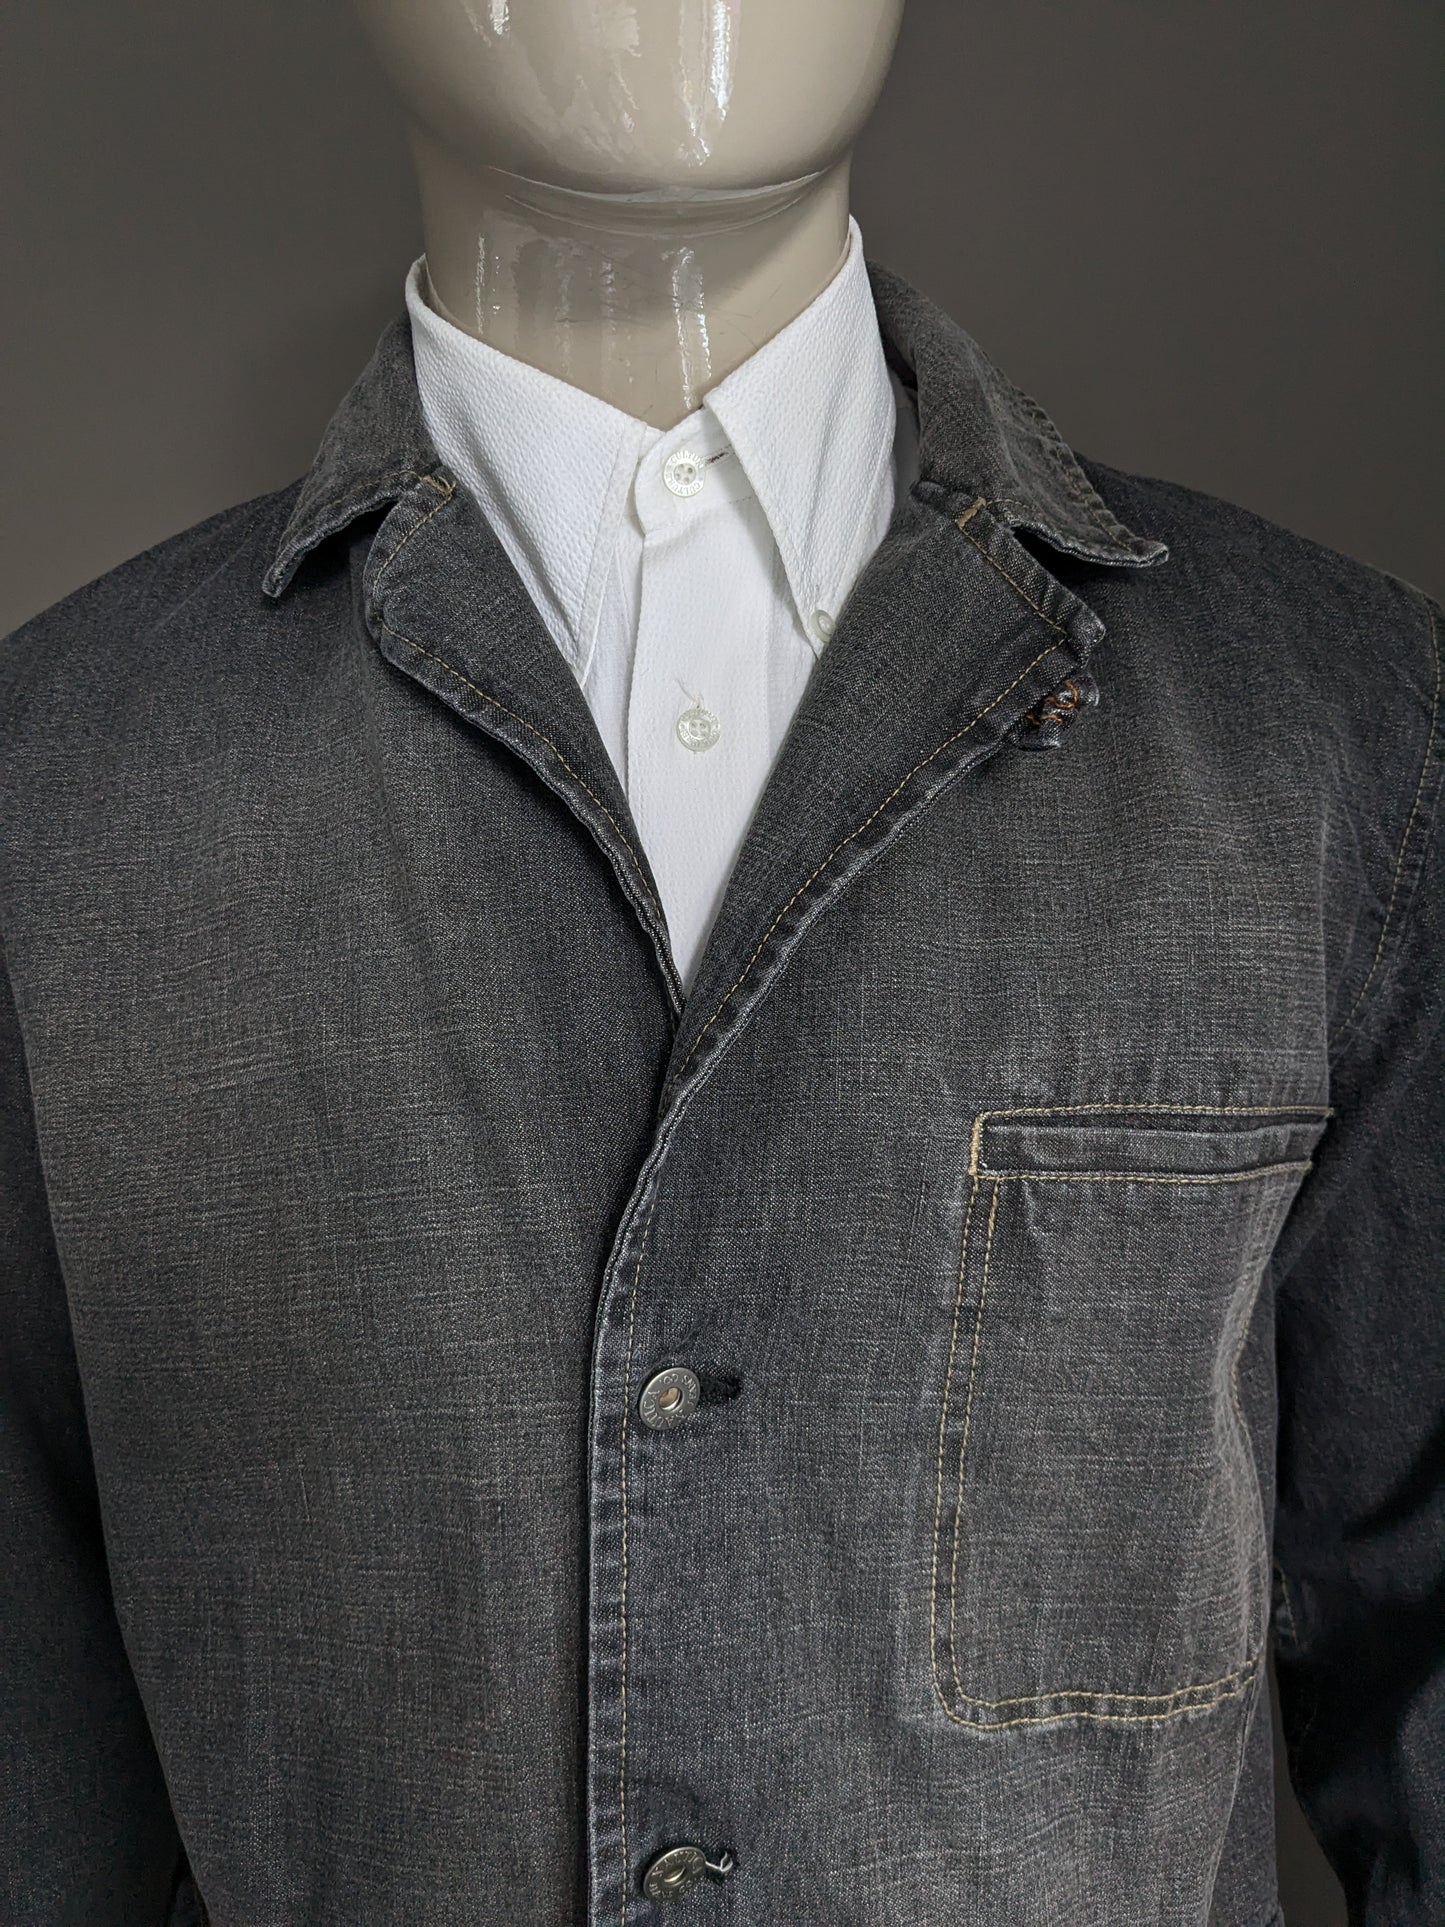 Nautica jeans half -length jens fabric jacket/ jacket. Gray black colored. Size M.